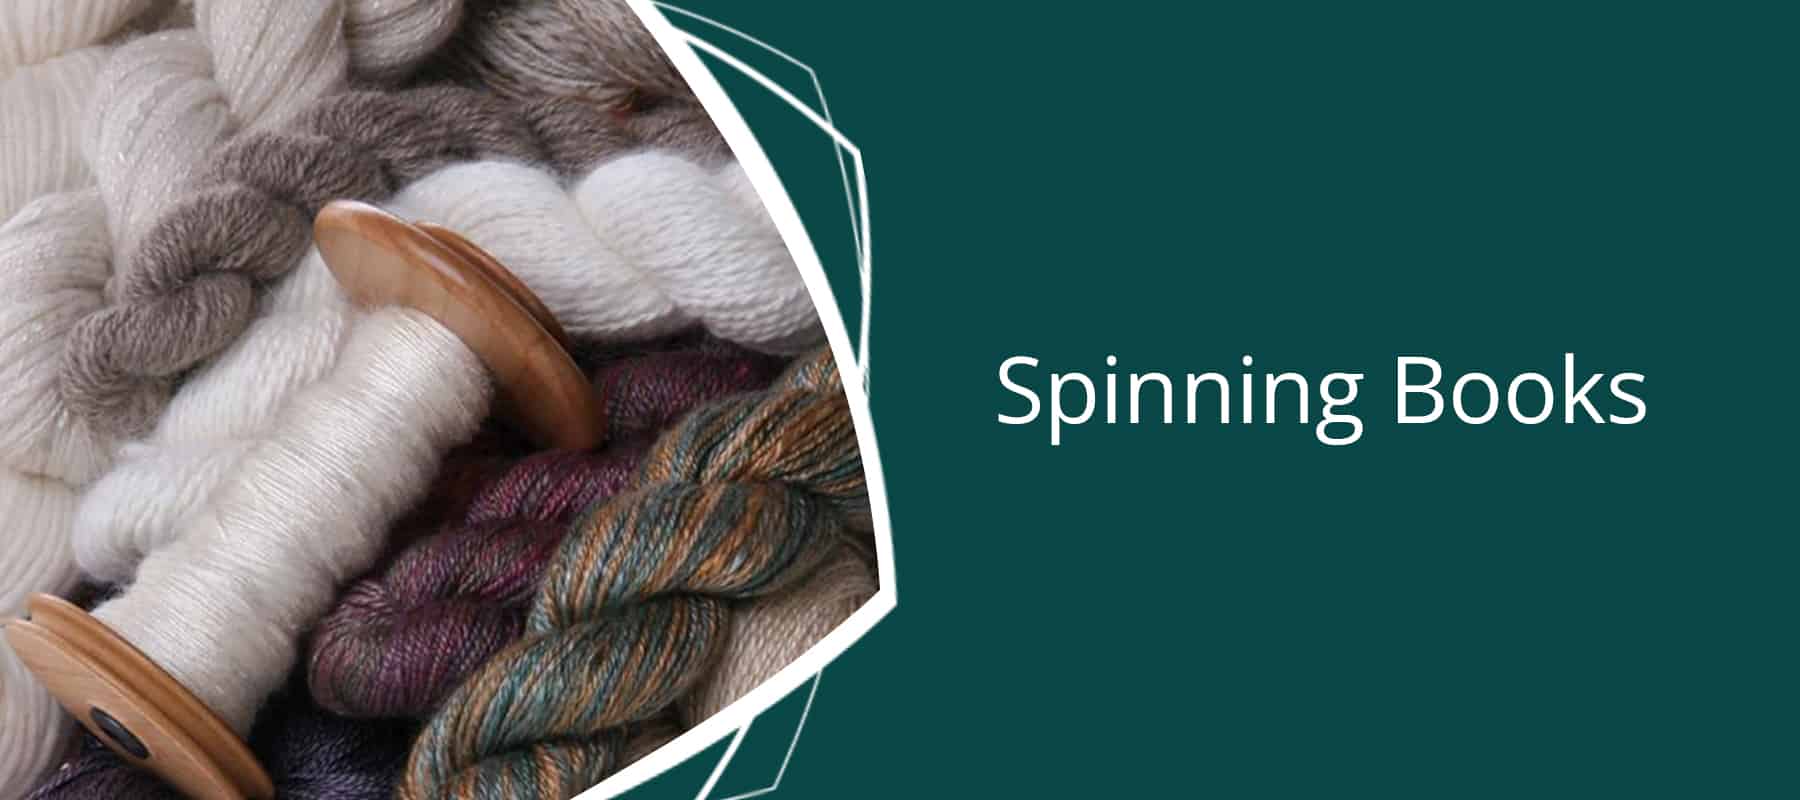 Spinning Books - Thread Collective Australia